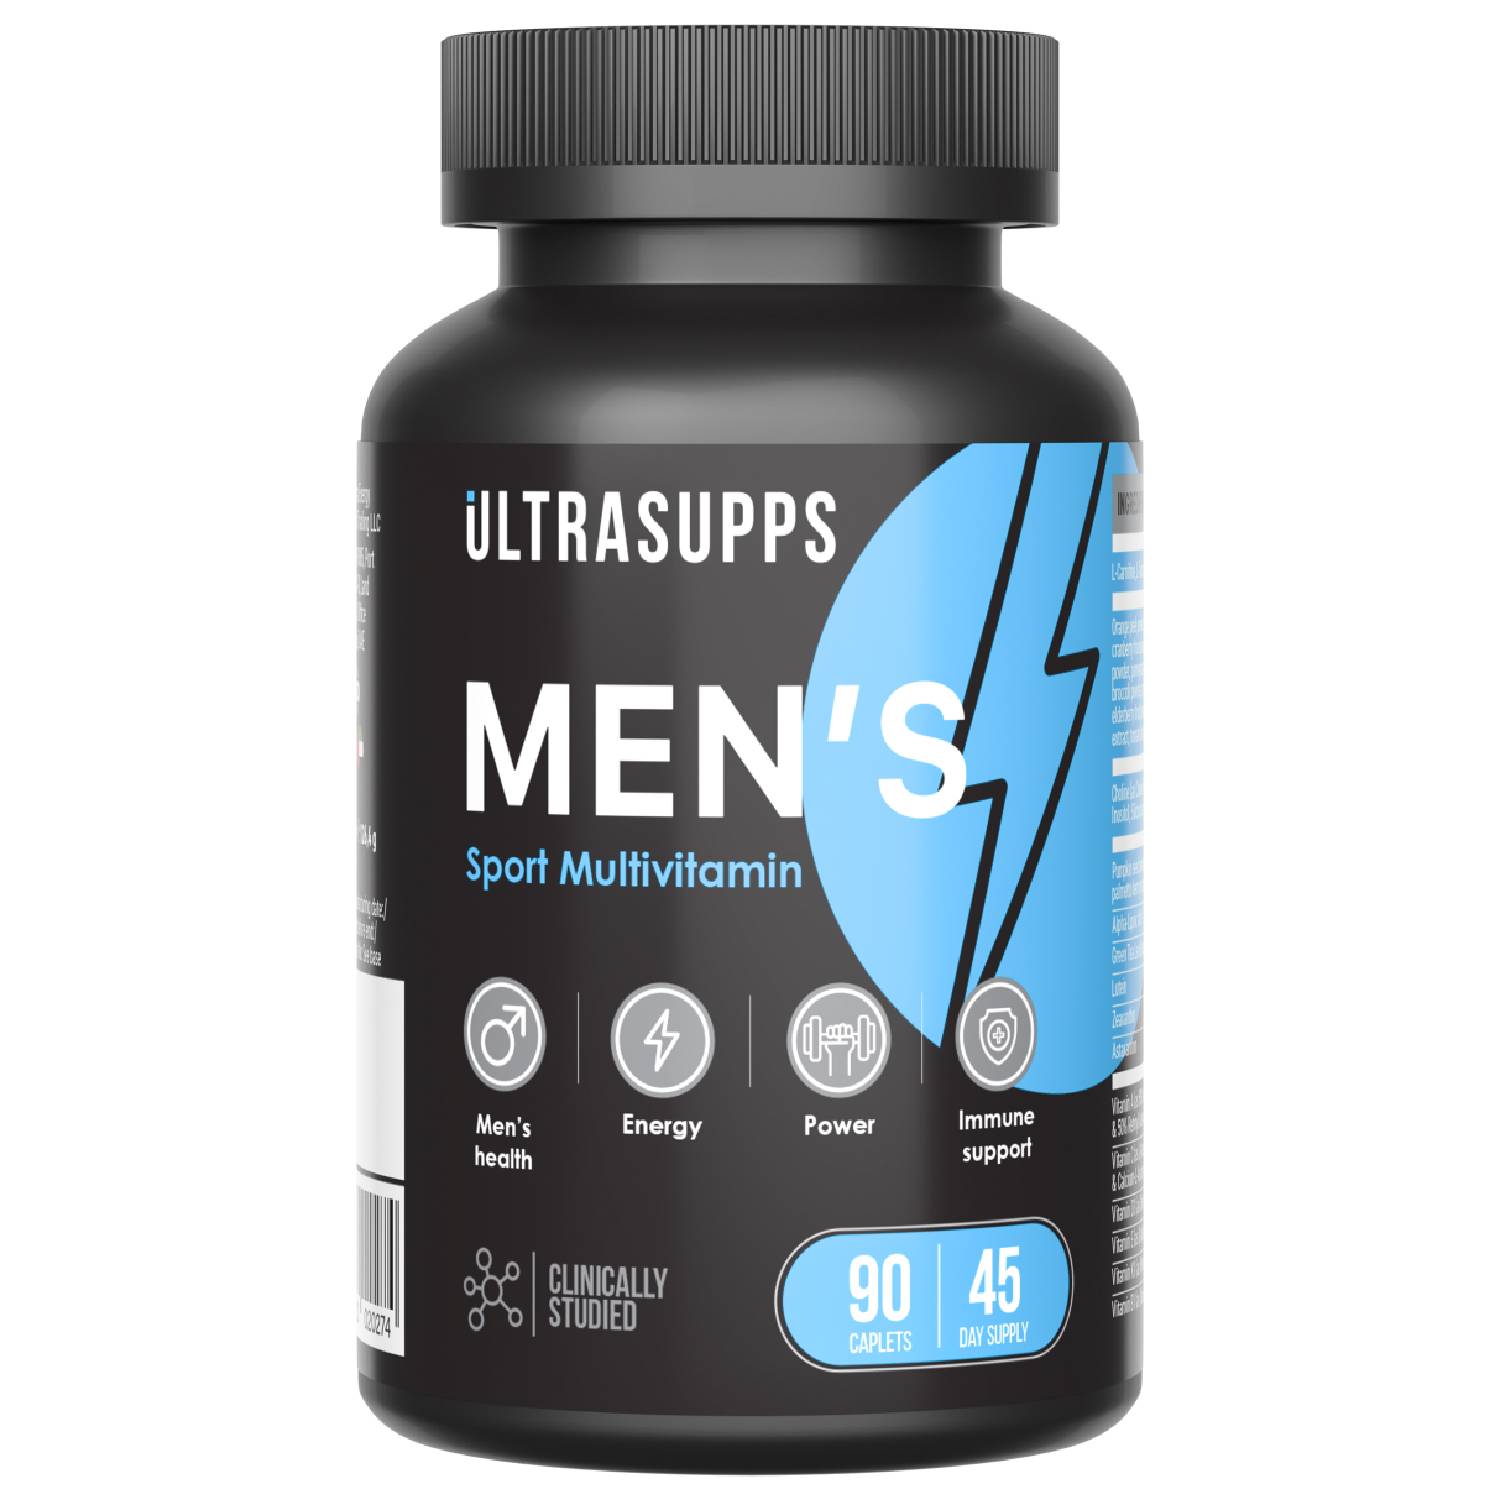 Ultrasupps Витаминно-минеральный комплекс для мужчин Men's Sport Multivitamin, 90 каплет (Ultrasupps, ) vplab мультивитаминный комплекс для мужчин multivitamin formula 90 таблеток vplab ultra men s